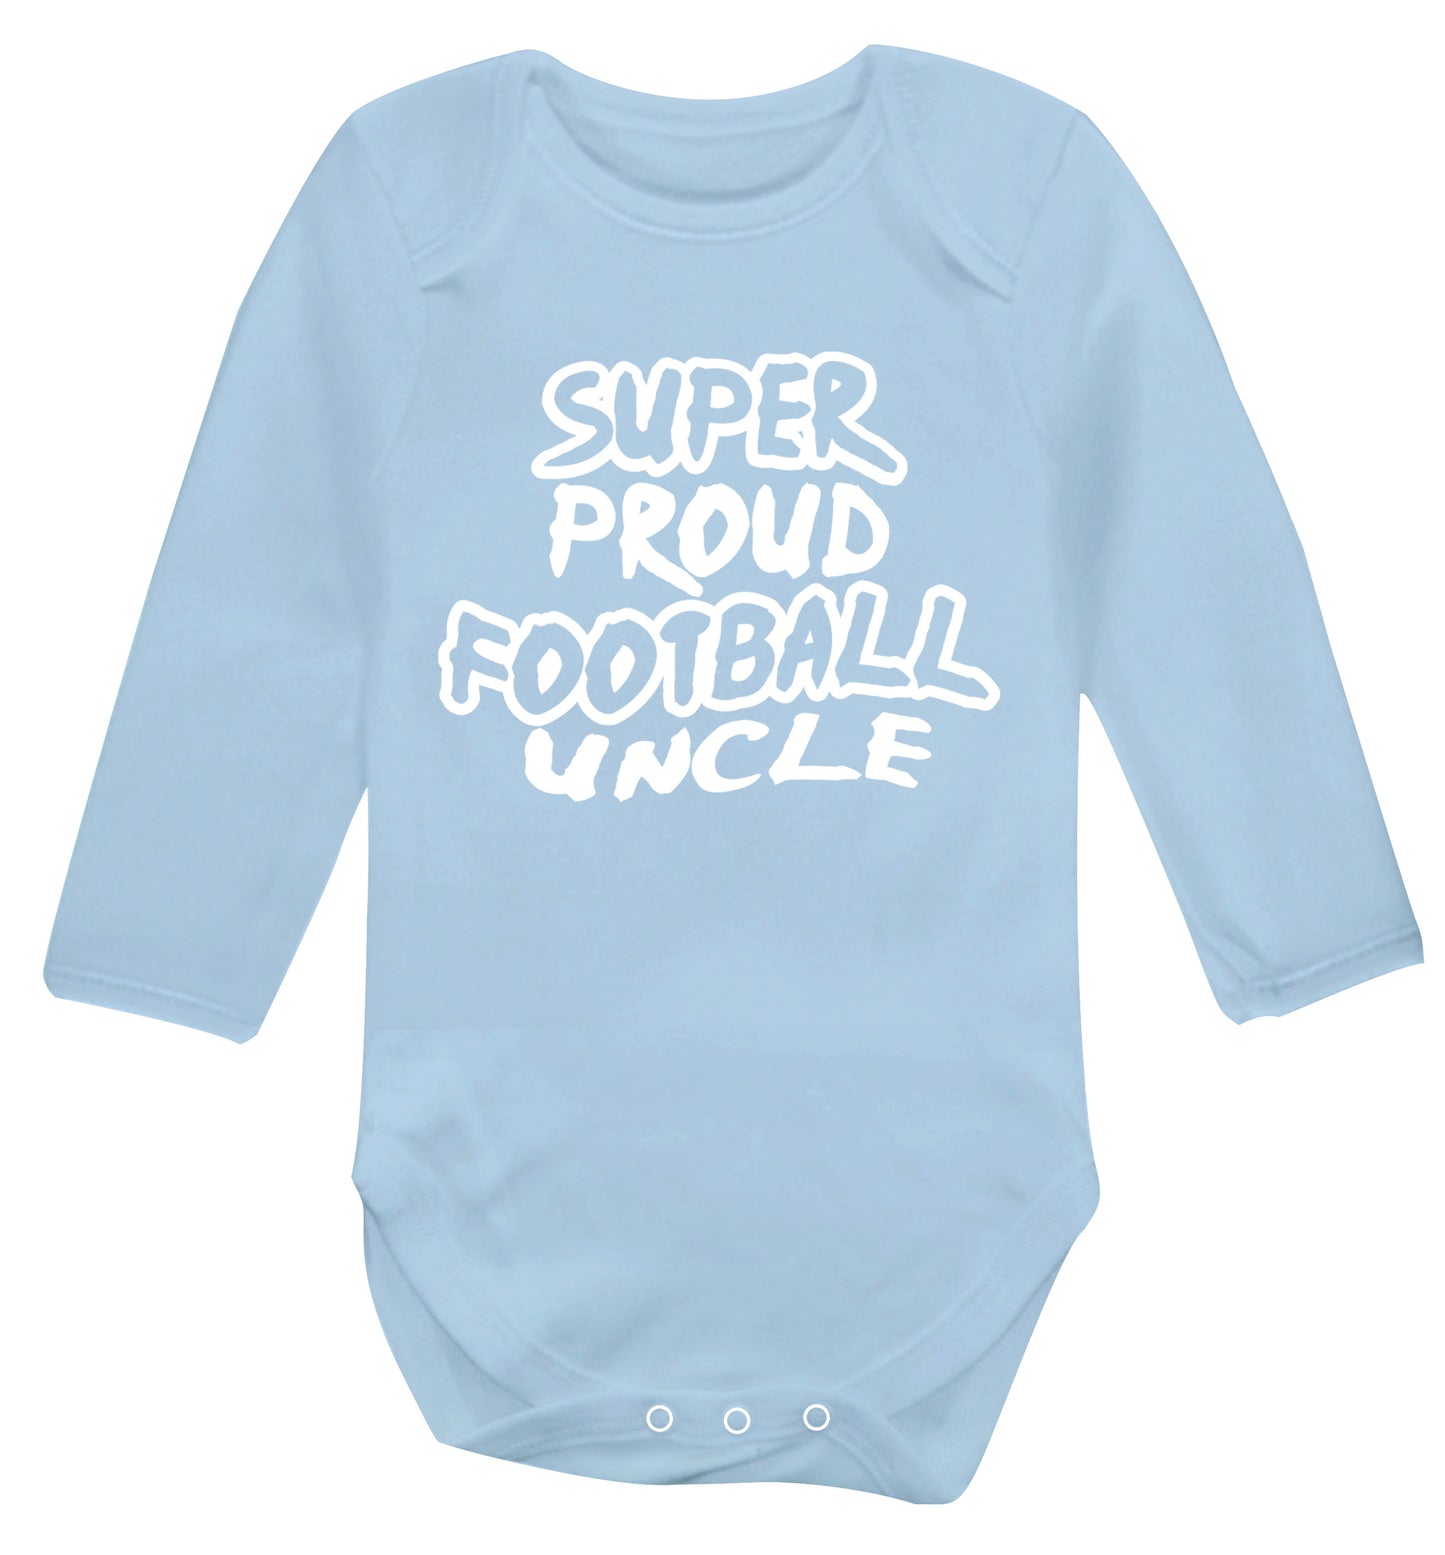 Super proud football uncle Baby Vest long sleeved pale blue 6-12 months